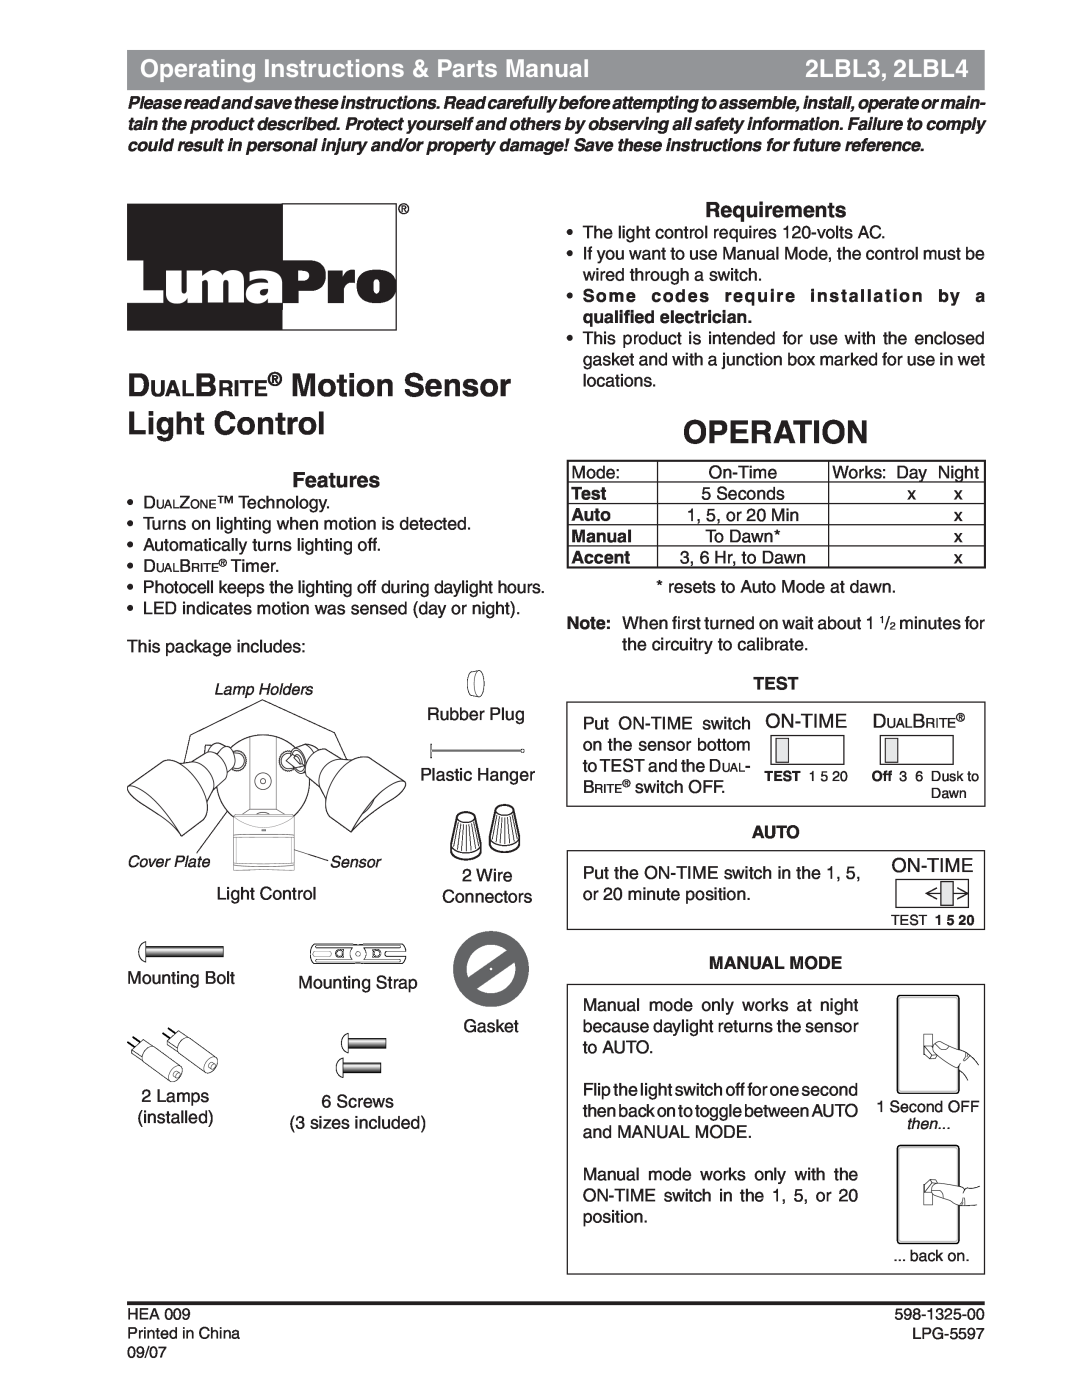 Heath Zenith operating instructions DualBrite Motion Sensor Light Control, Operation, 2LBL3, 2LBL4, Requirements, Test 